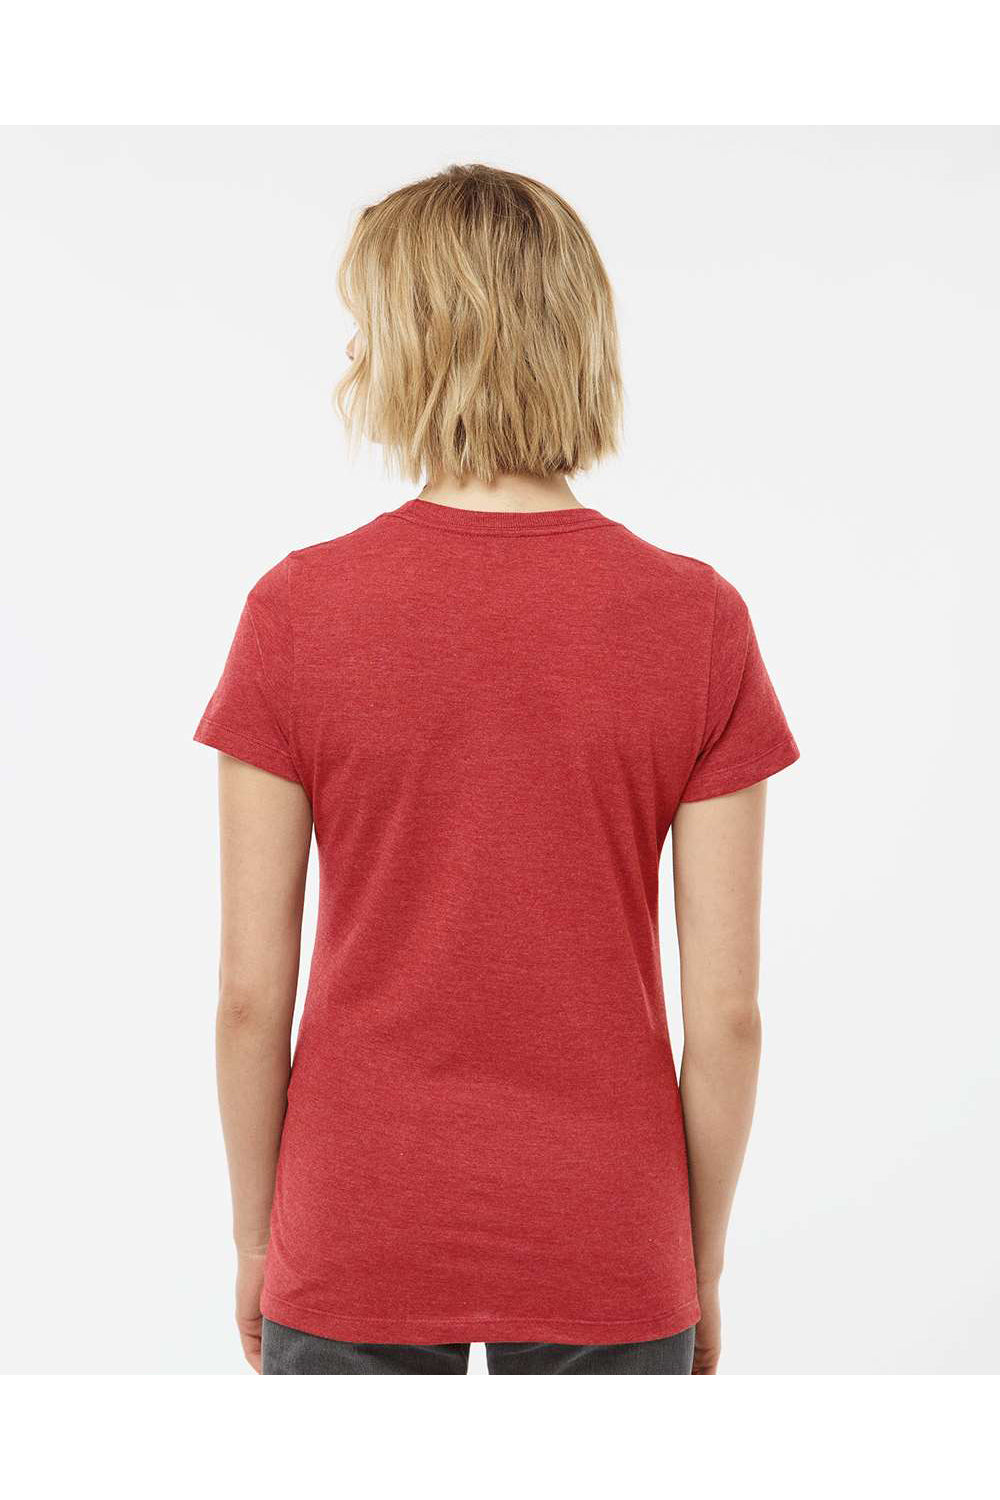 Tultex 542 Womens Premium Short Sleeve Crewneck T-Shirt Heather Red Model Back